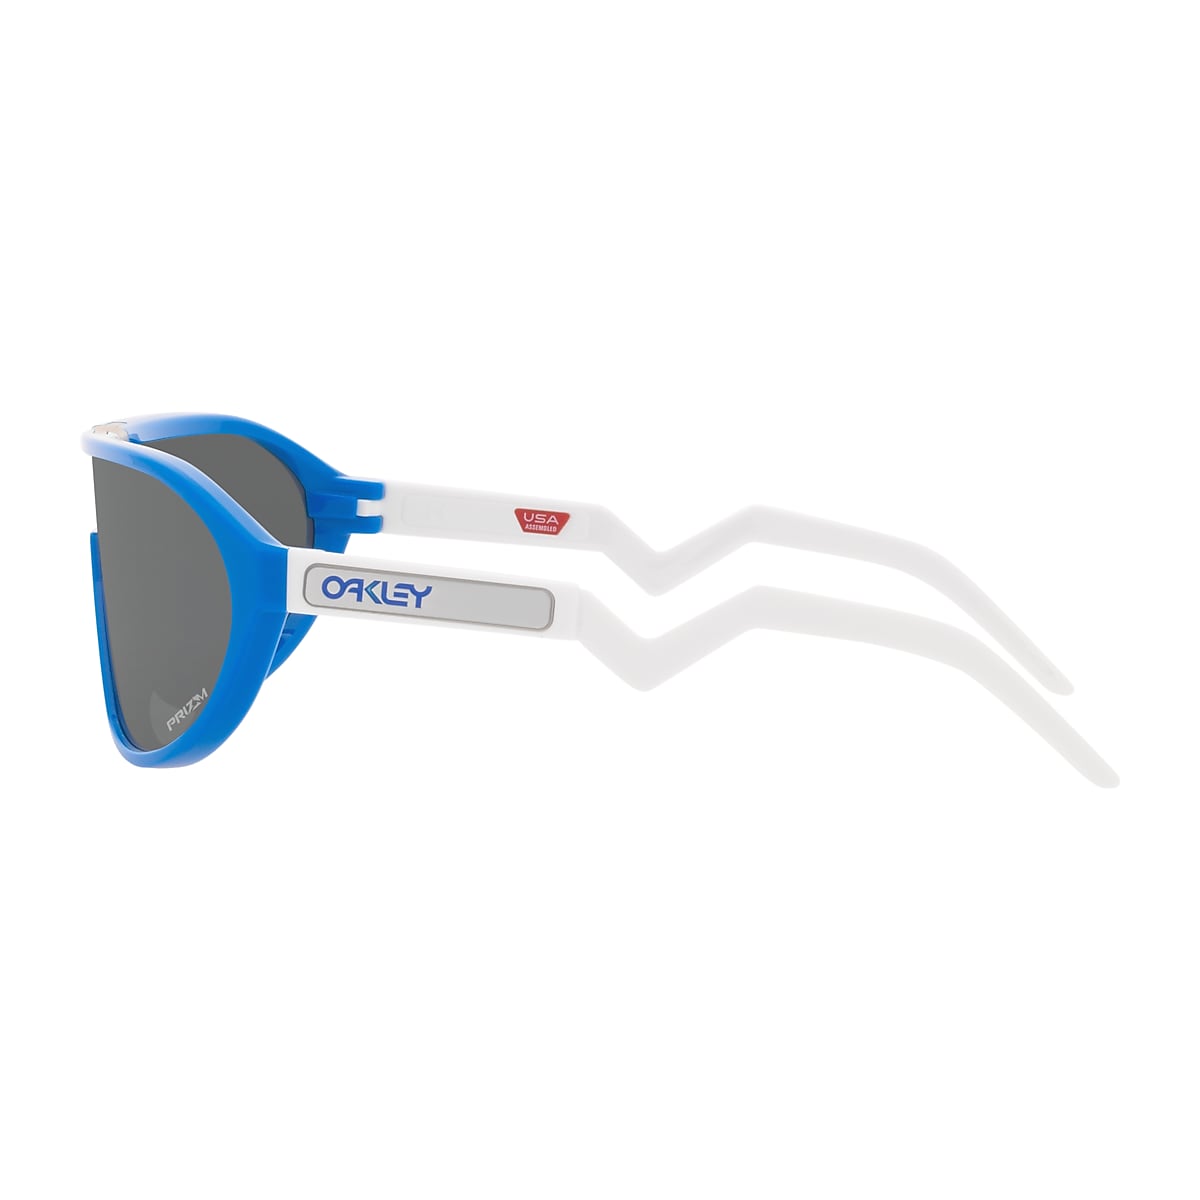 Oakley Men's CMDN (Low Bridge Fit) Sunglasses